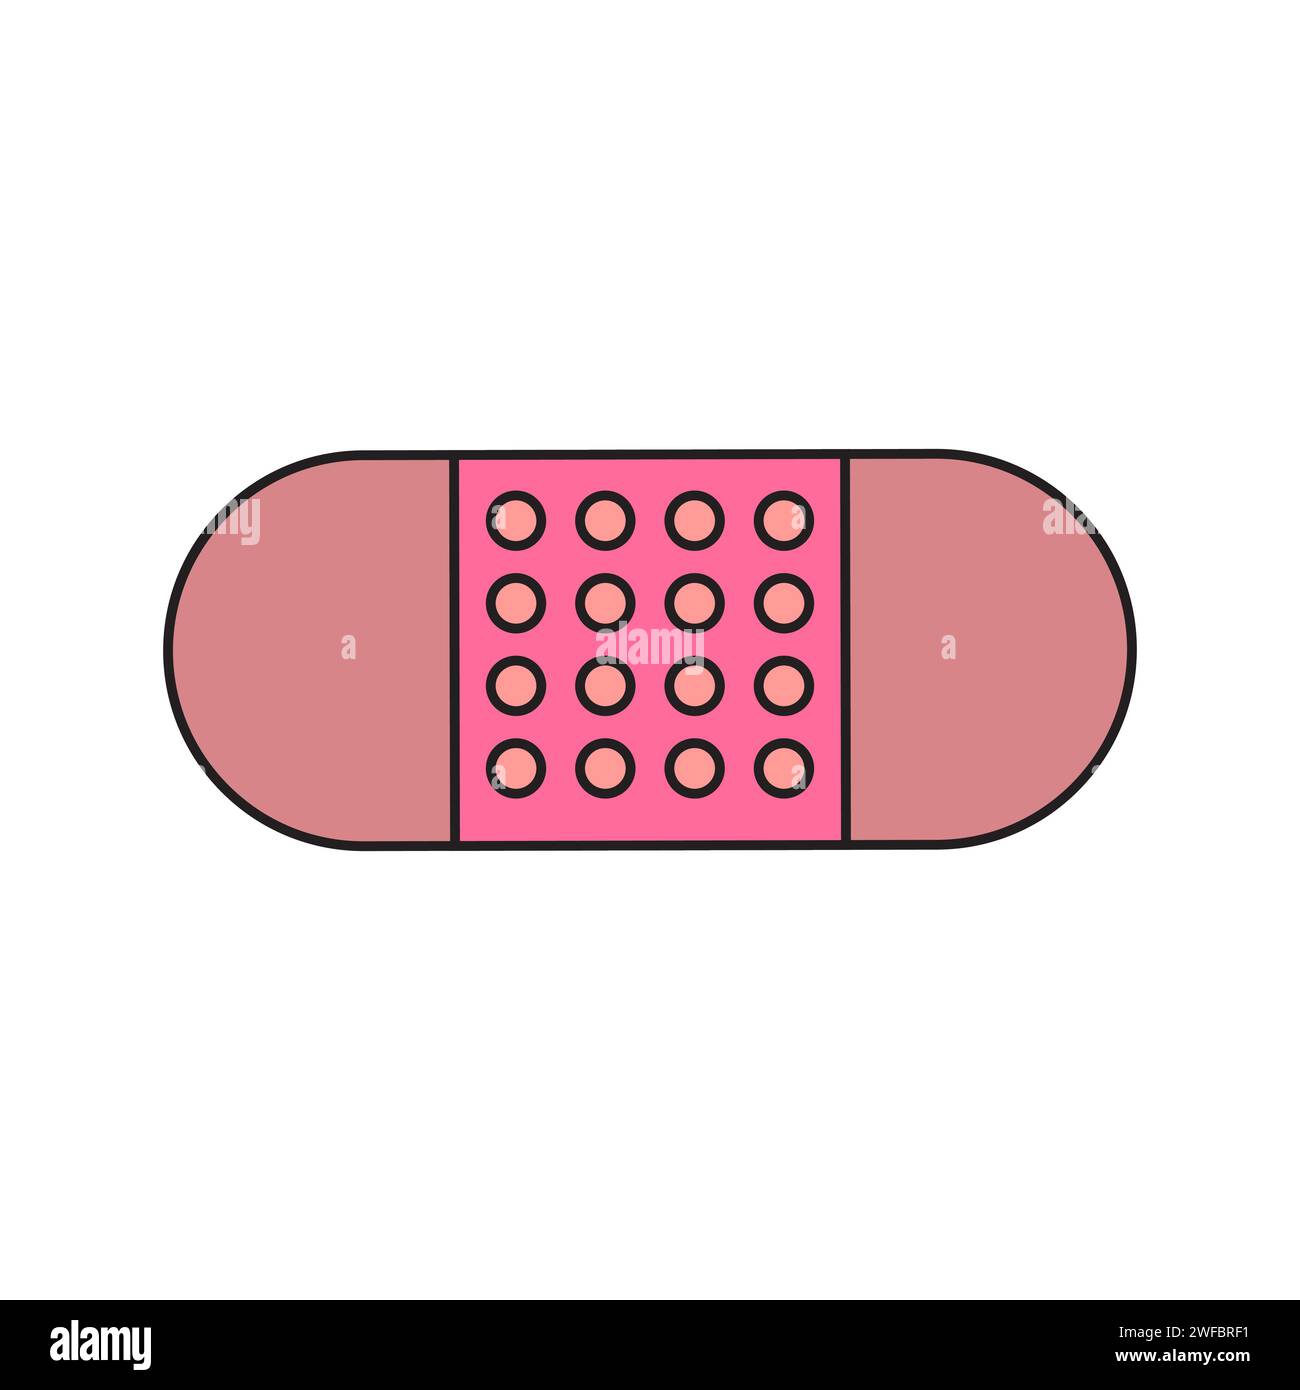 Adhesive plaster icon. Pink sign. Medicine element. Simple flat art. Cartoon art. Vector illustration. Stock image. EPS 10. Stock Vector